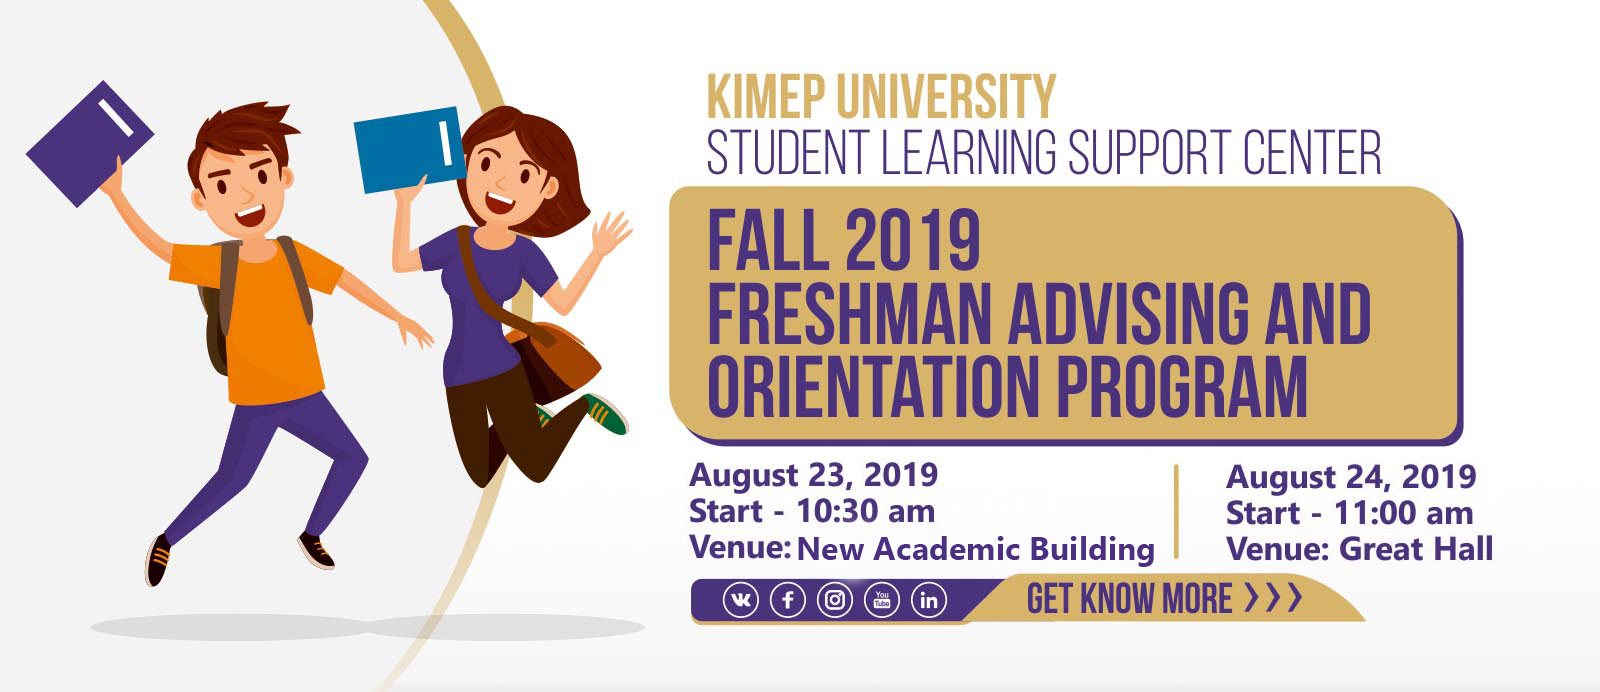 Fall-2019-Freshman-advising-August-23